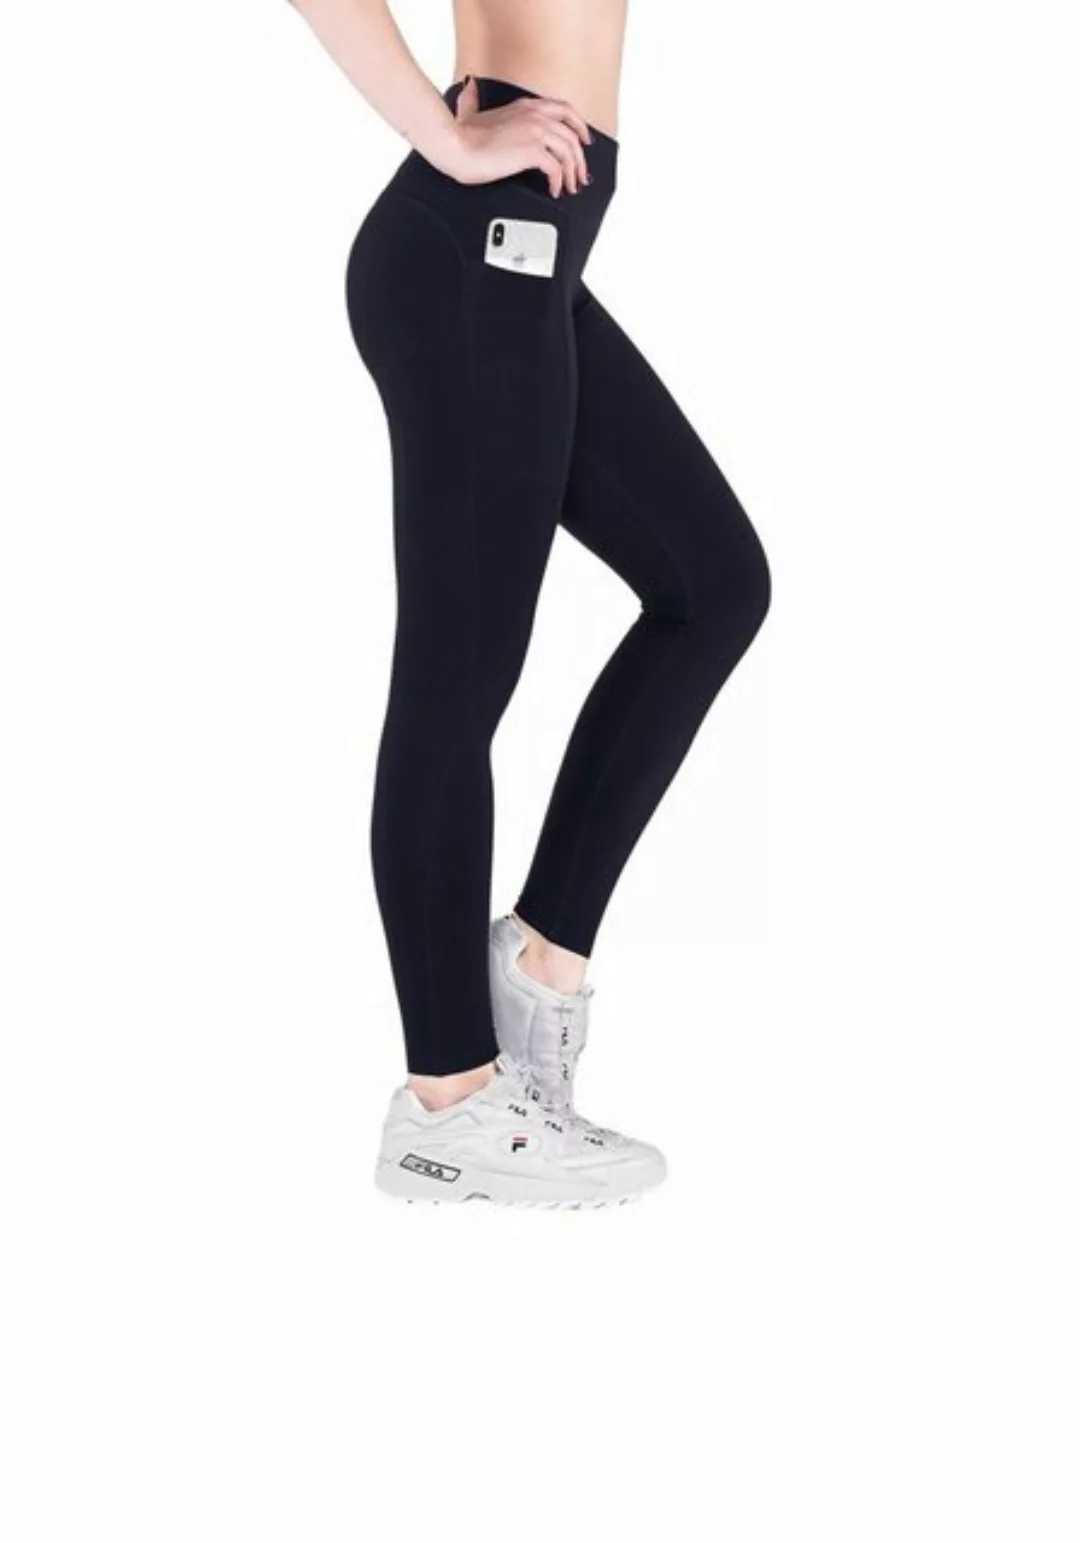 VS Variosports Yogaleggings Damen Yoga sport leggings lang mit Handytasche günstig online kaufen